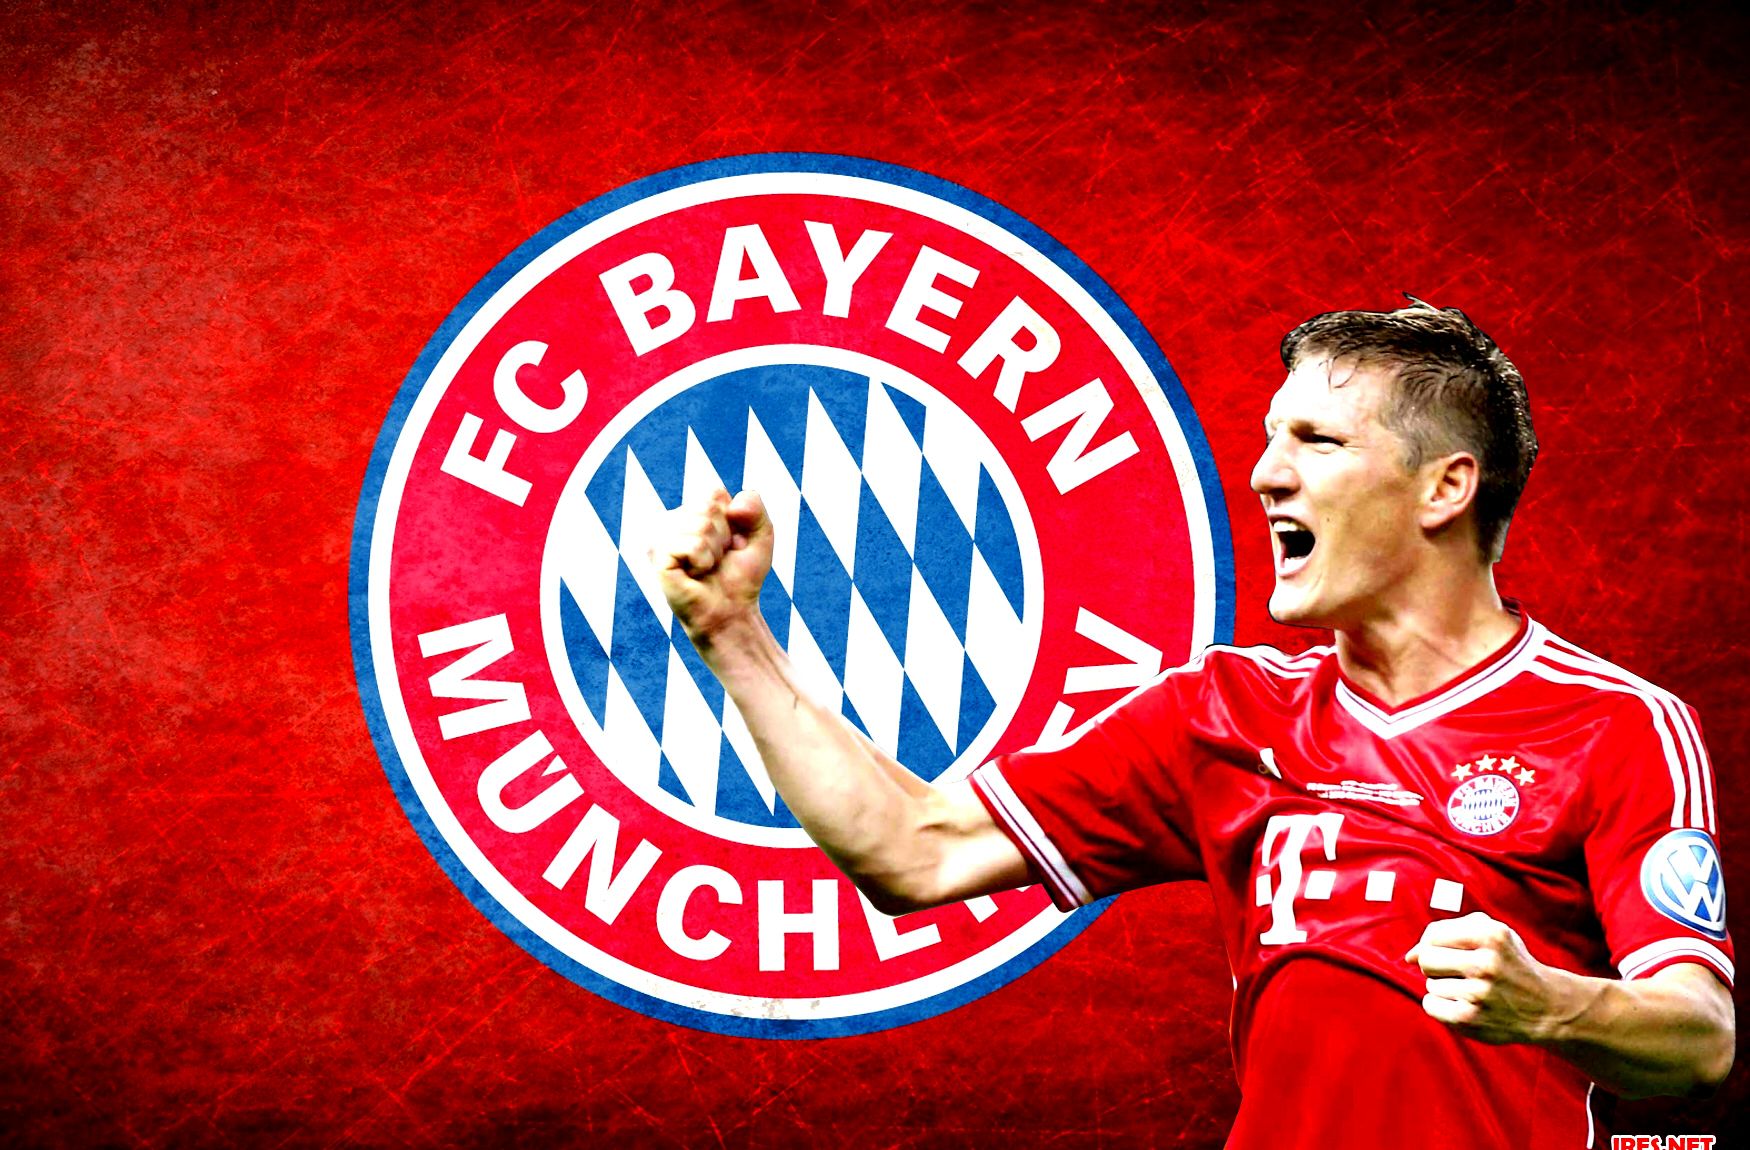 Bayern Munchen - Bastian Schweinsteiger Wallpaper by wolodin on ...